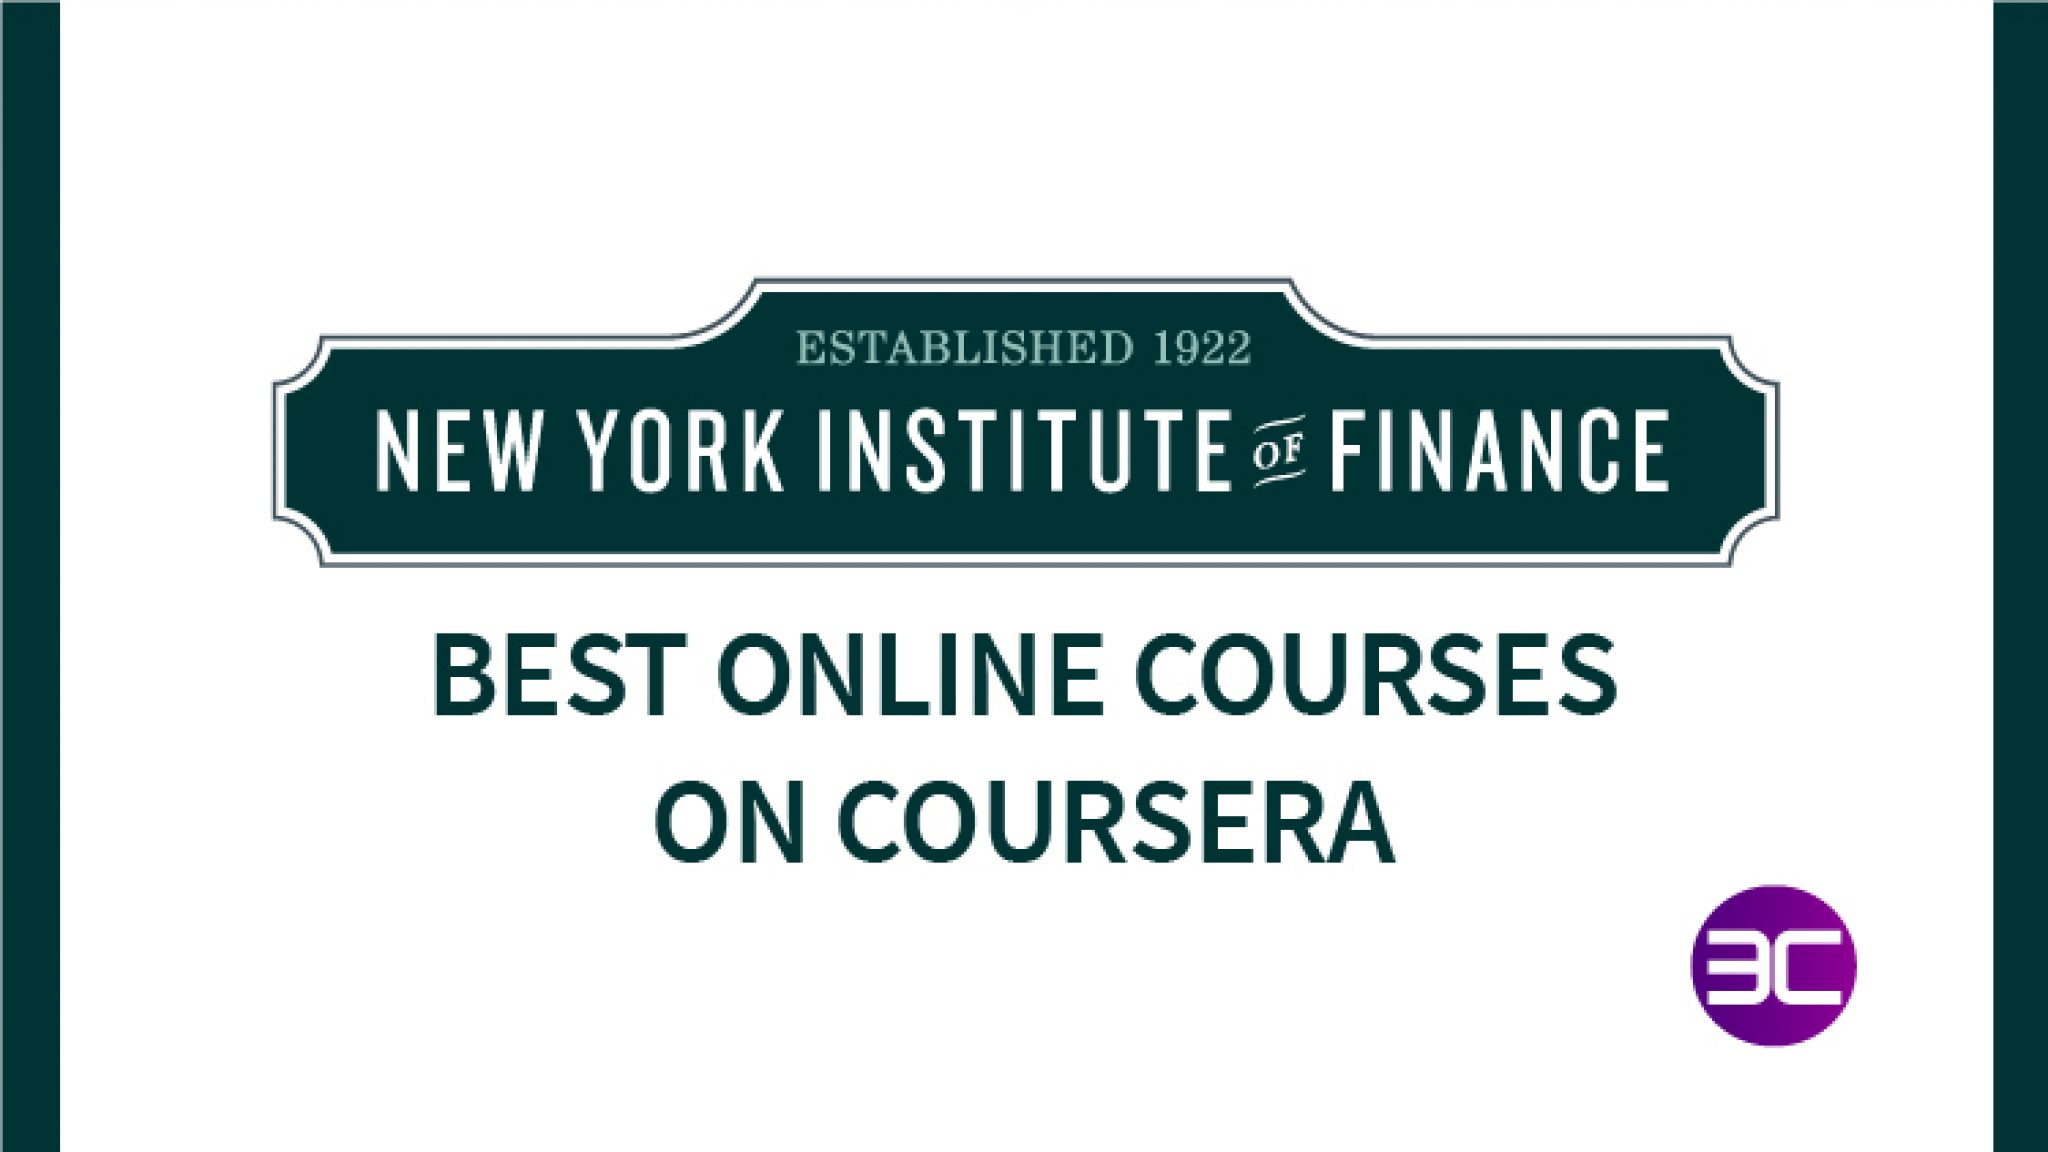 New York Institute Of Finance 3c 2048x1152 